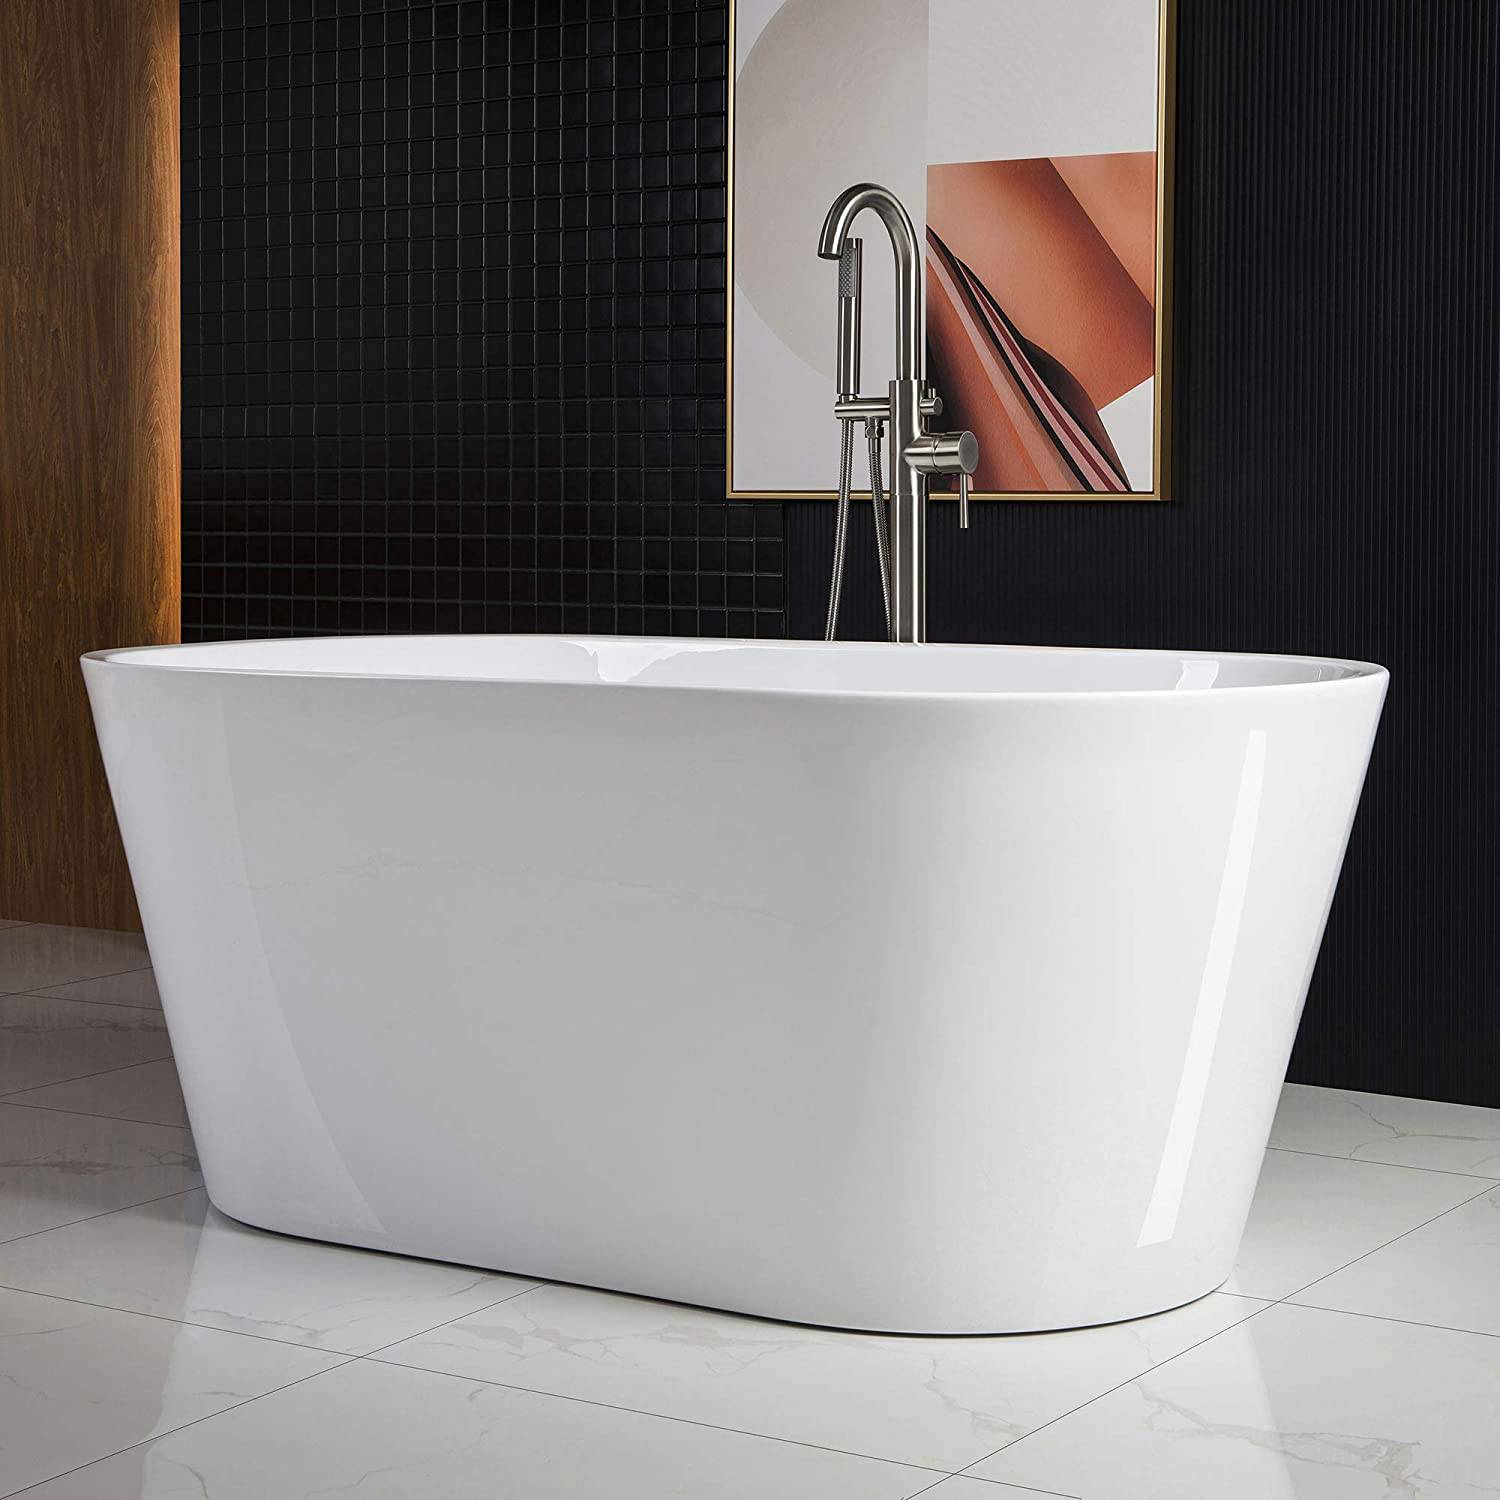 Venetio 59" 100% Acrylic Freestanding Bathtub Contemporary Soaking Tub with Brushed Nickel Overflow and Drain In White - Venetio